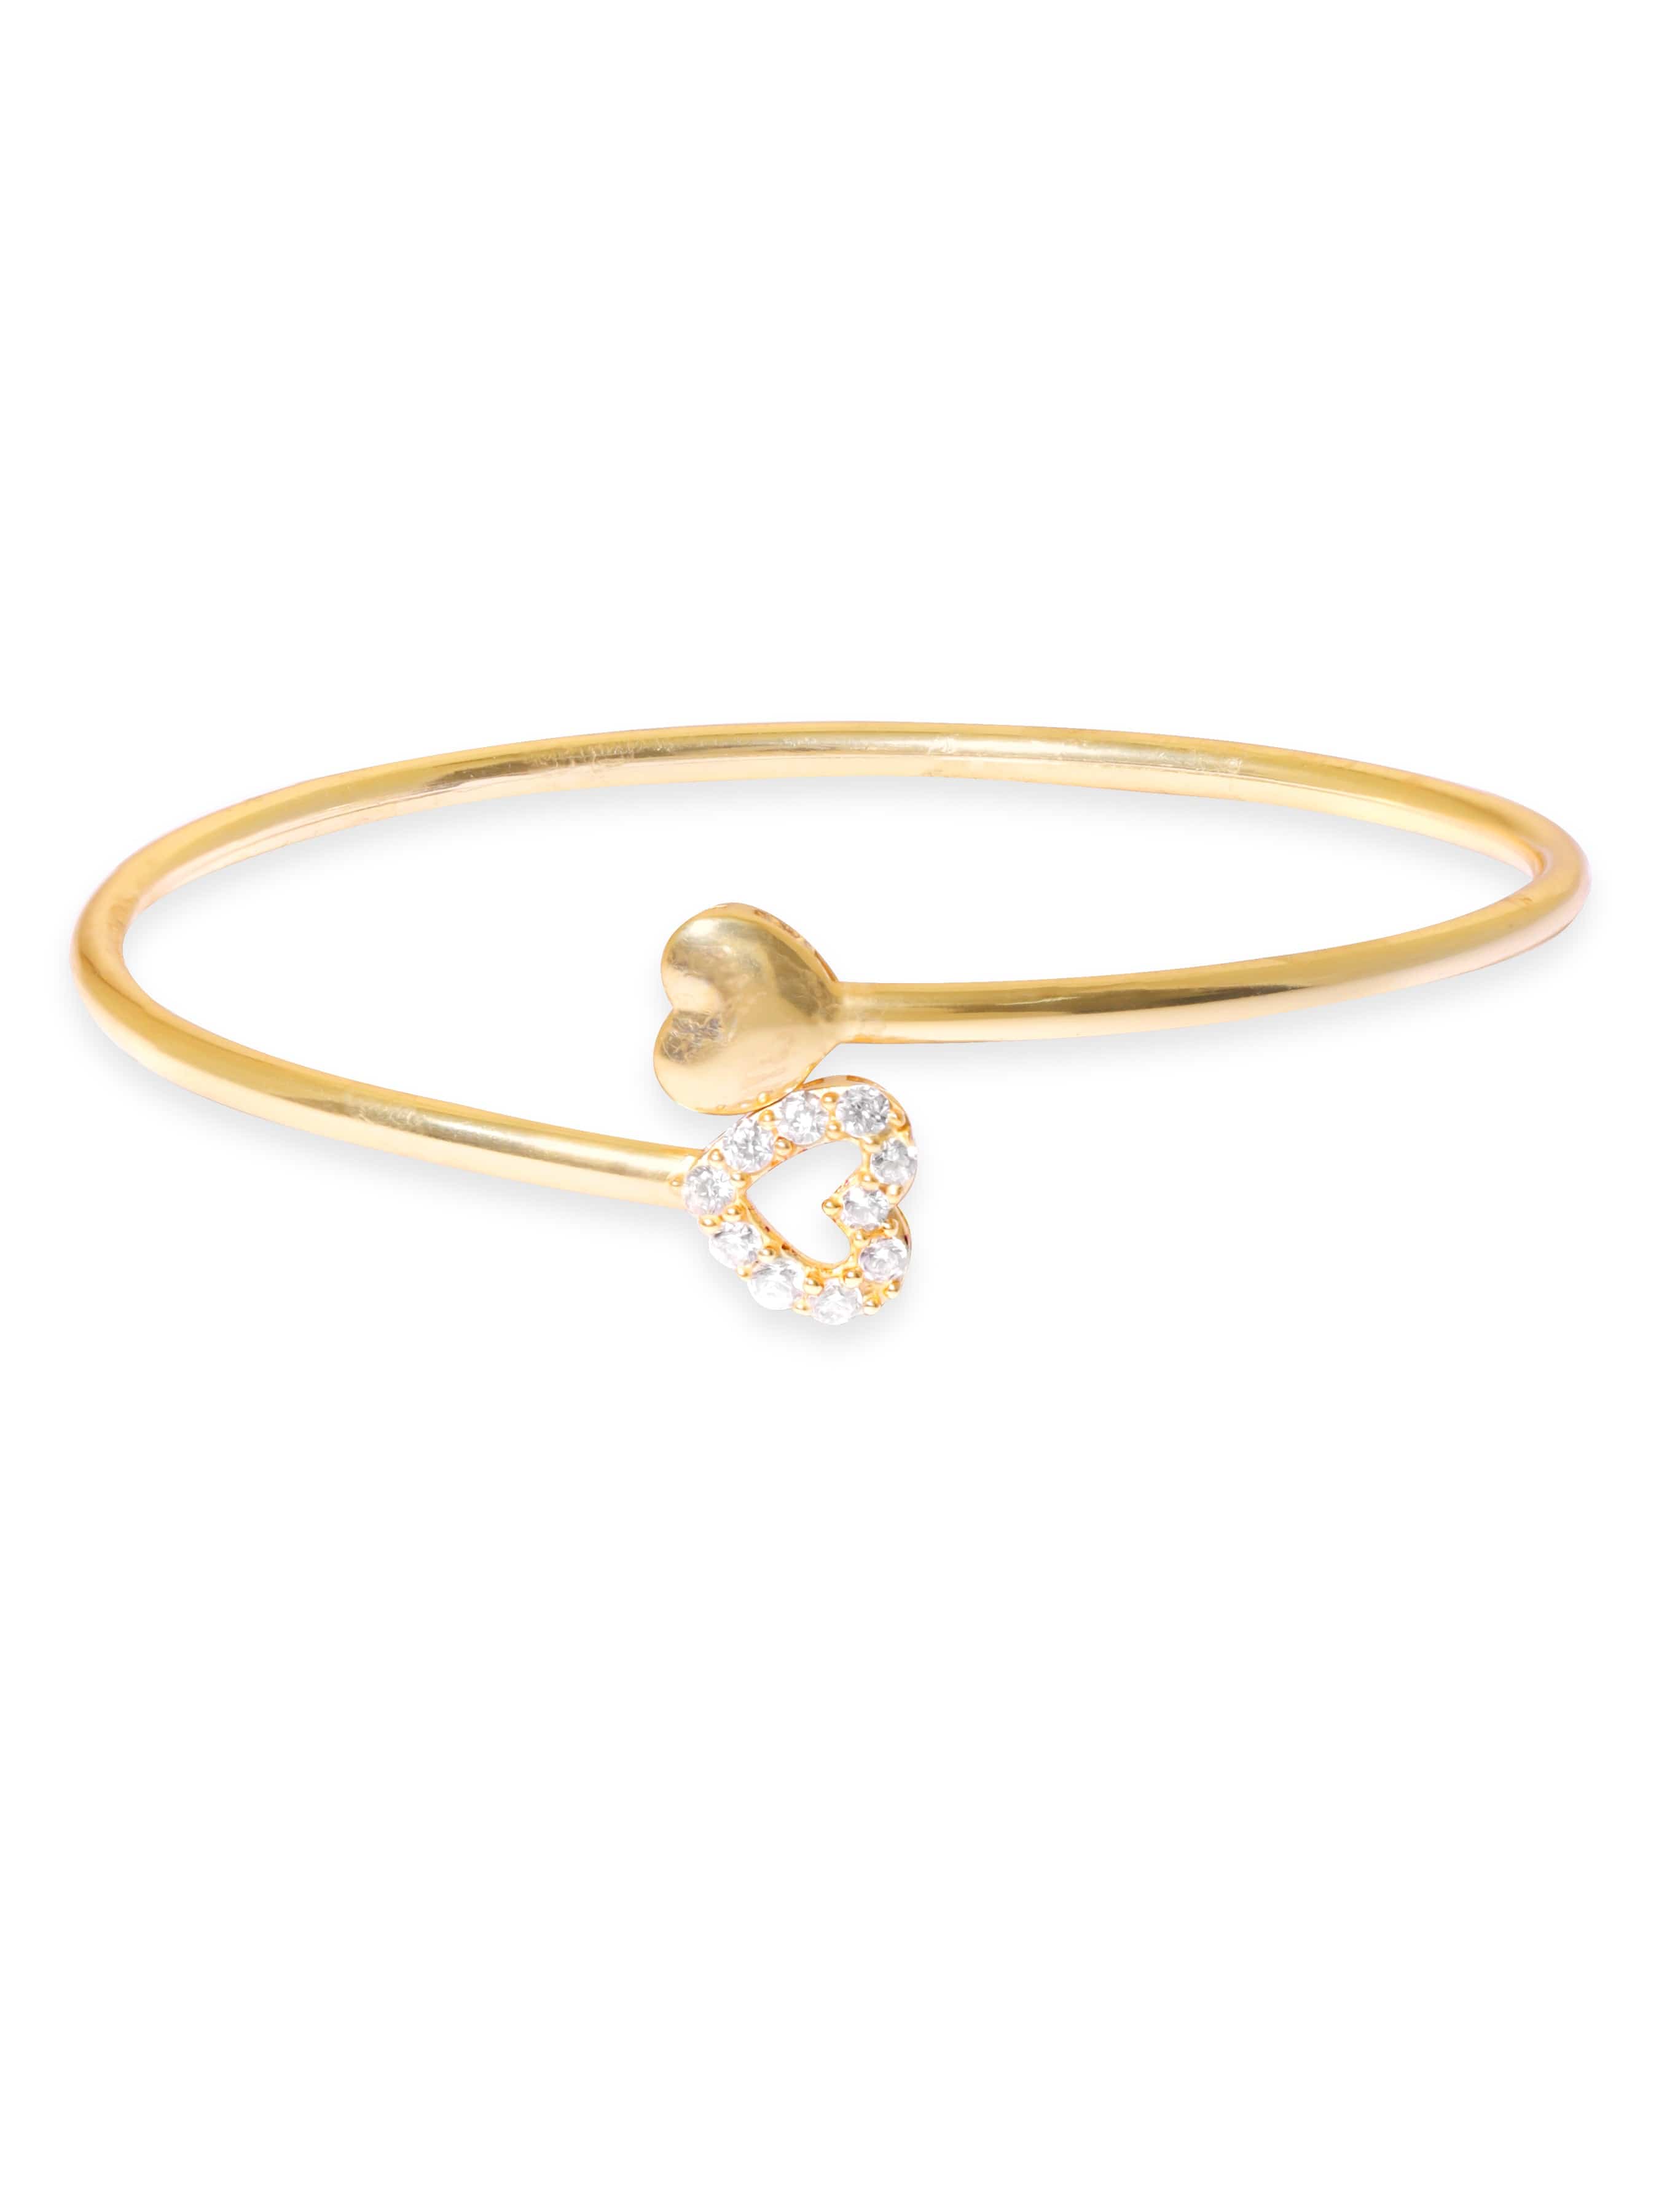 Midas 14k Yellow Gold Adjustable 3D Heart Bracelet |Mazza Fine Jewelry